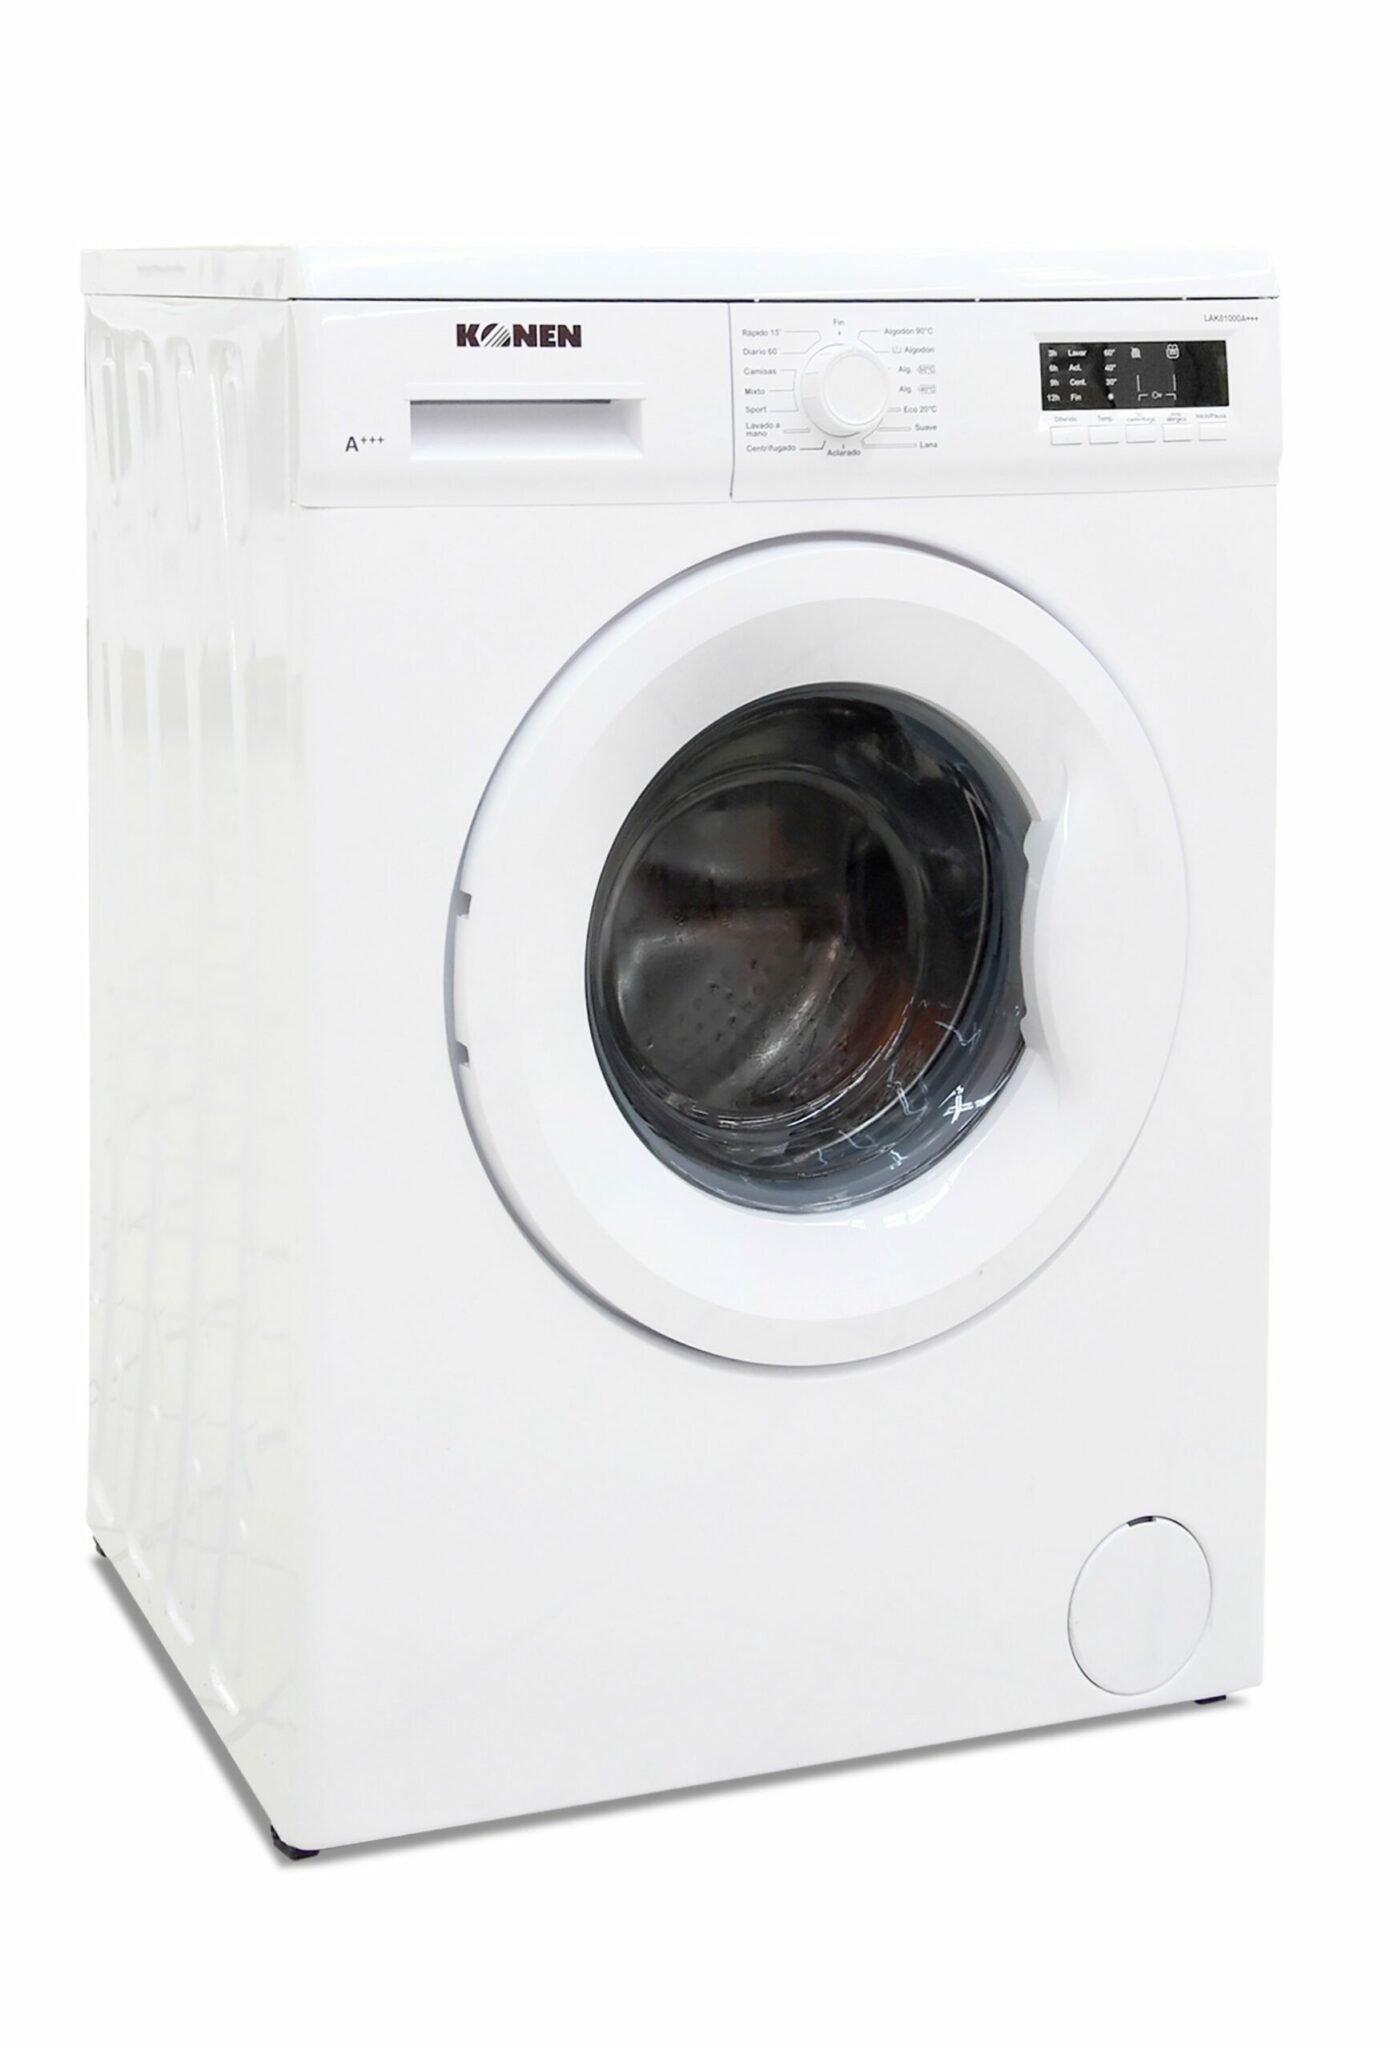 Konen lak10inox lavadora 10kg 1400rpm clase c inox barato de outlet